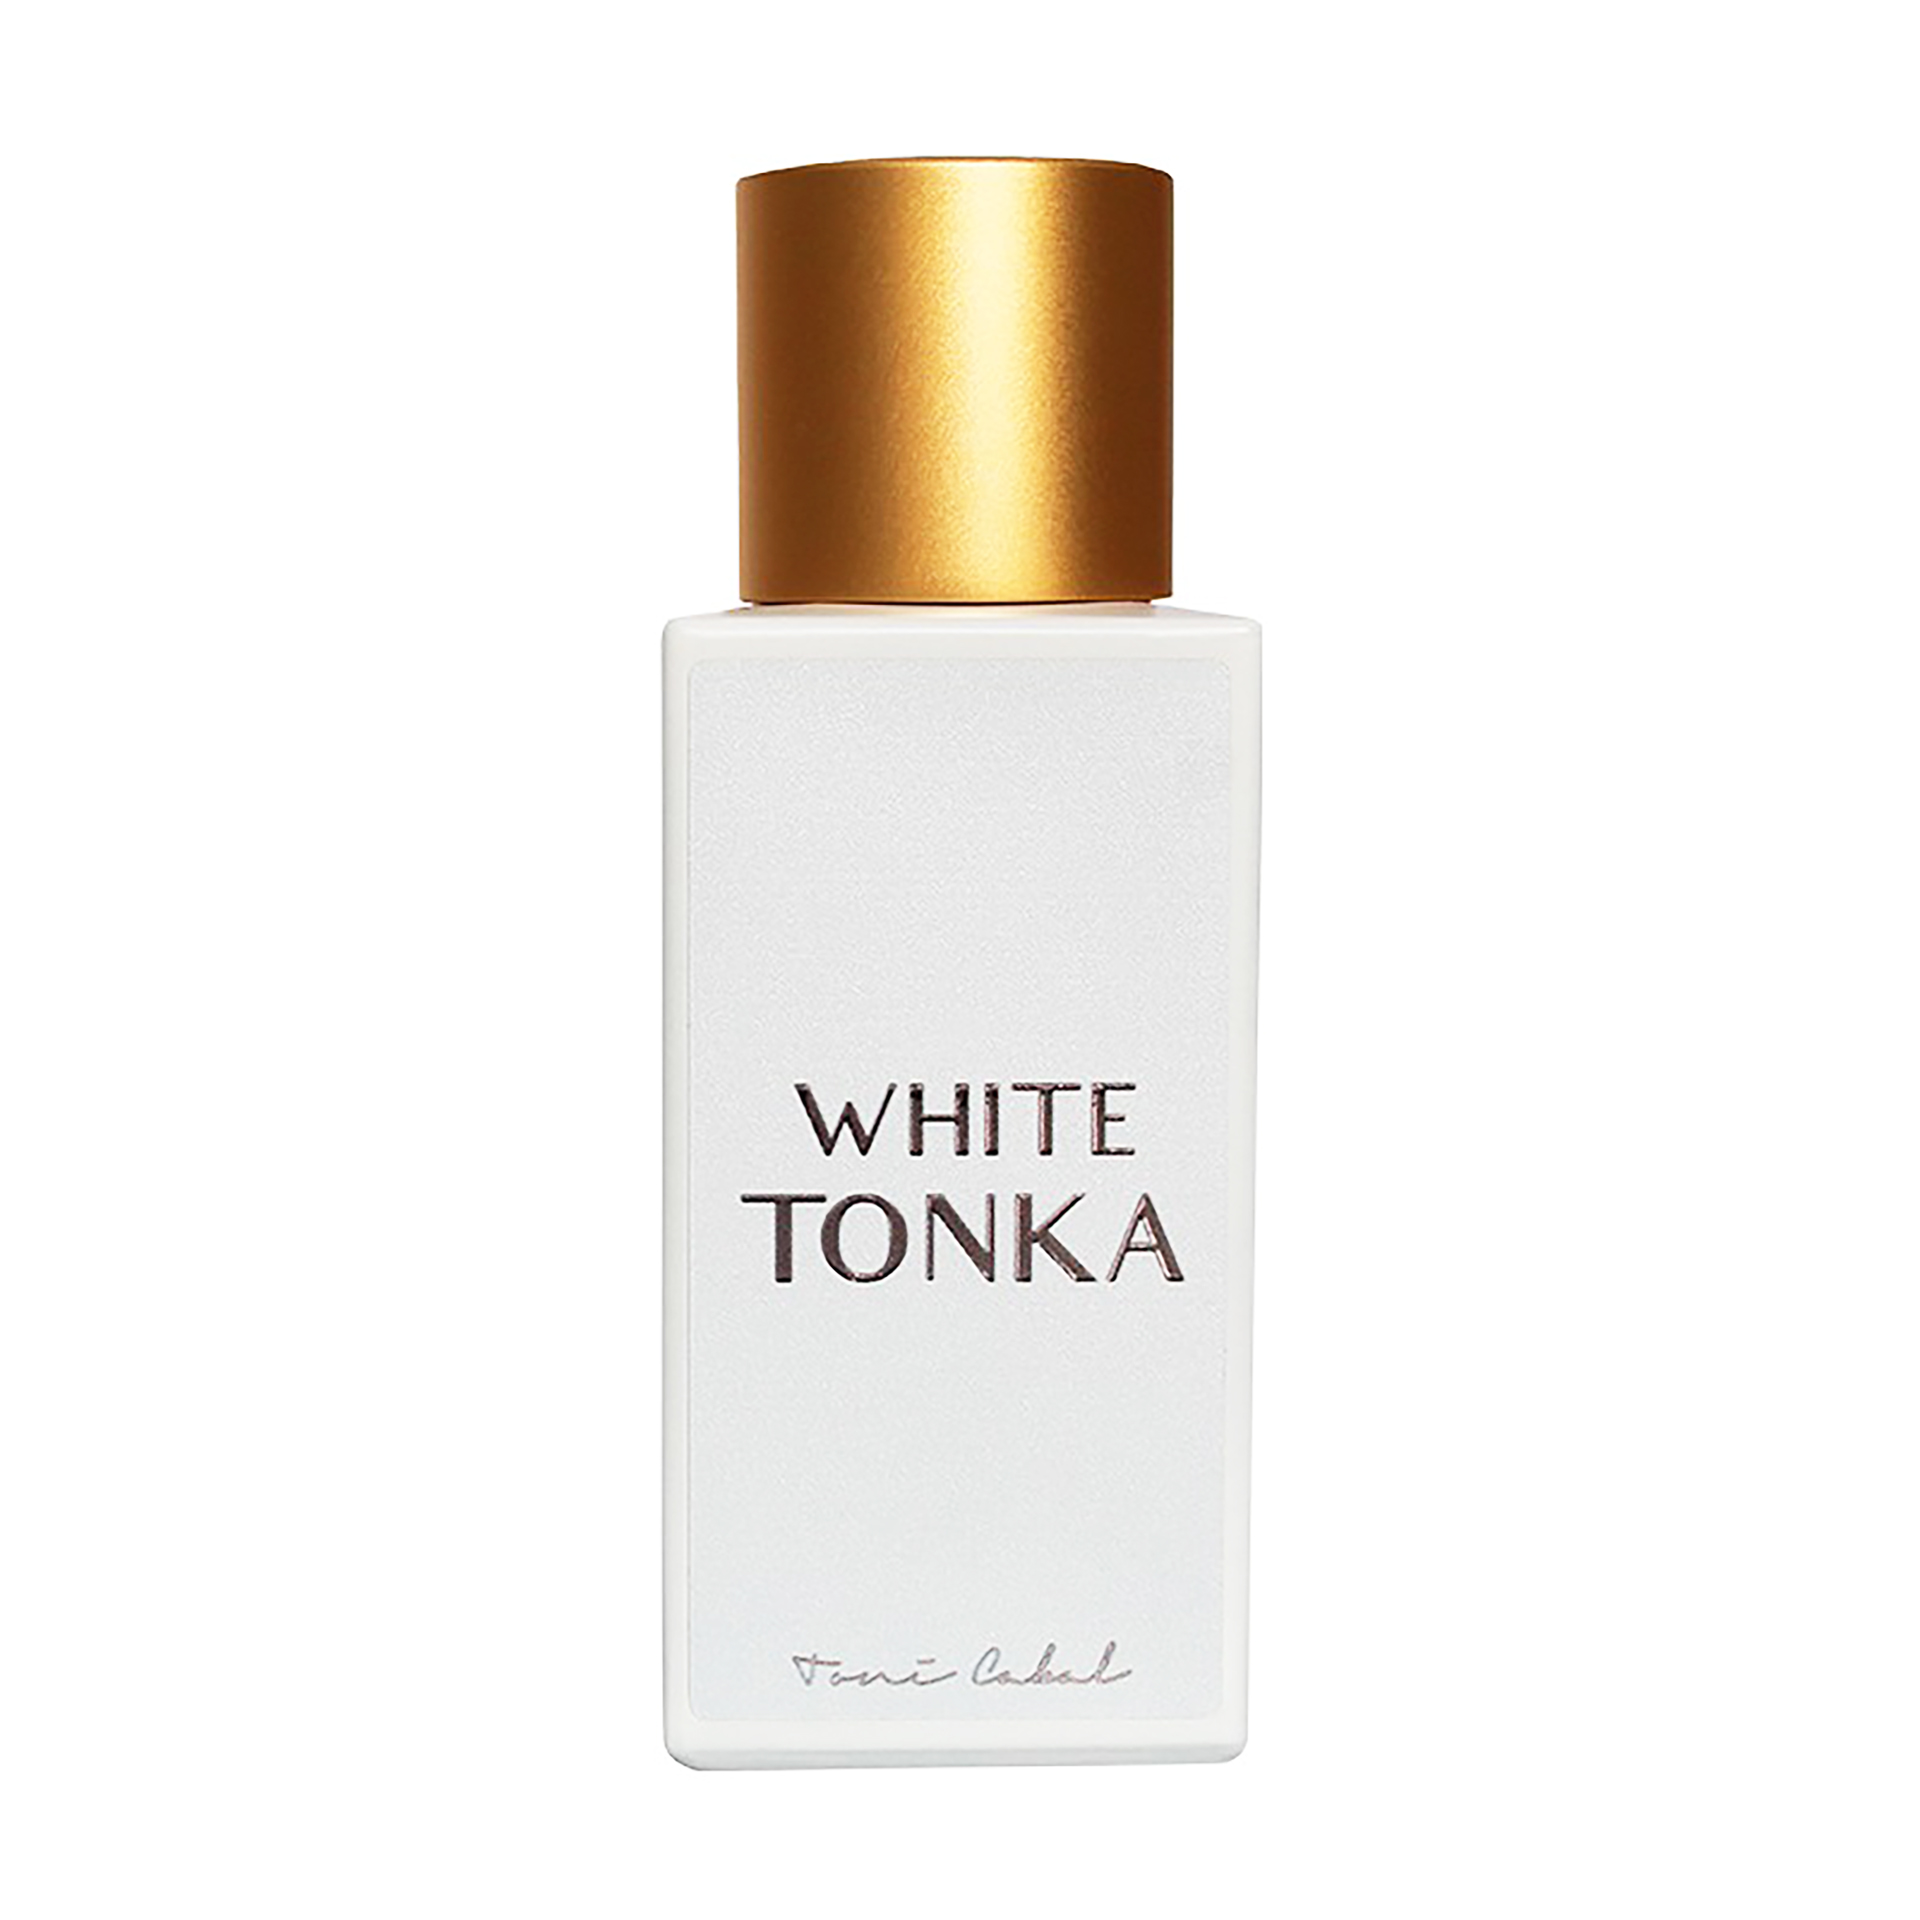 white tonka 50ml toni cabal daring light perfumes niche barcelona 1